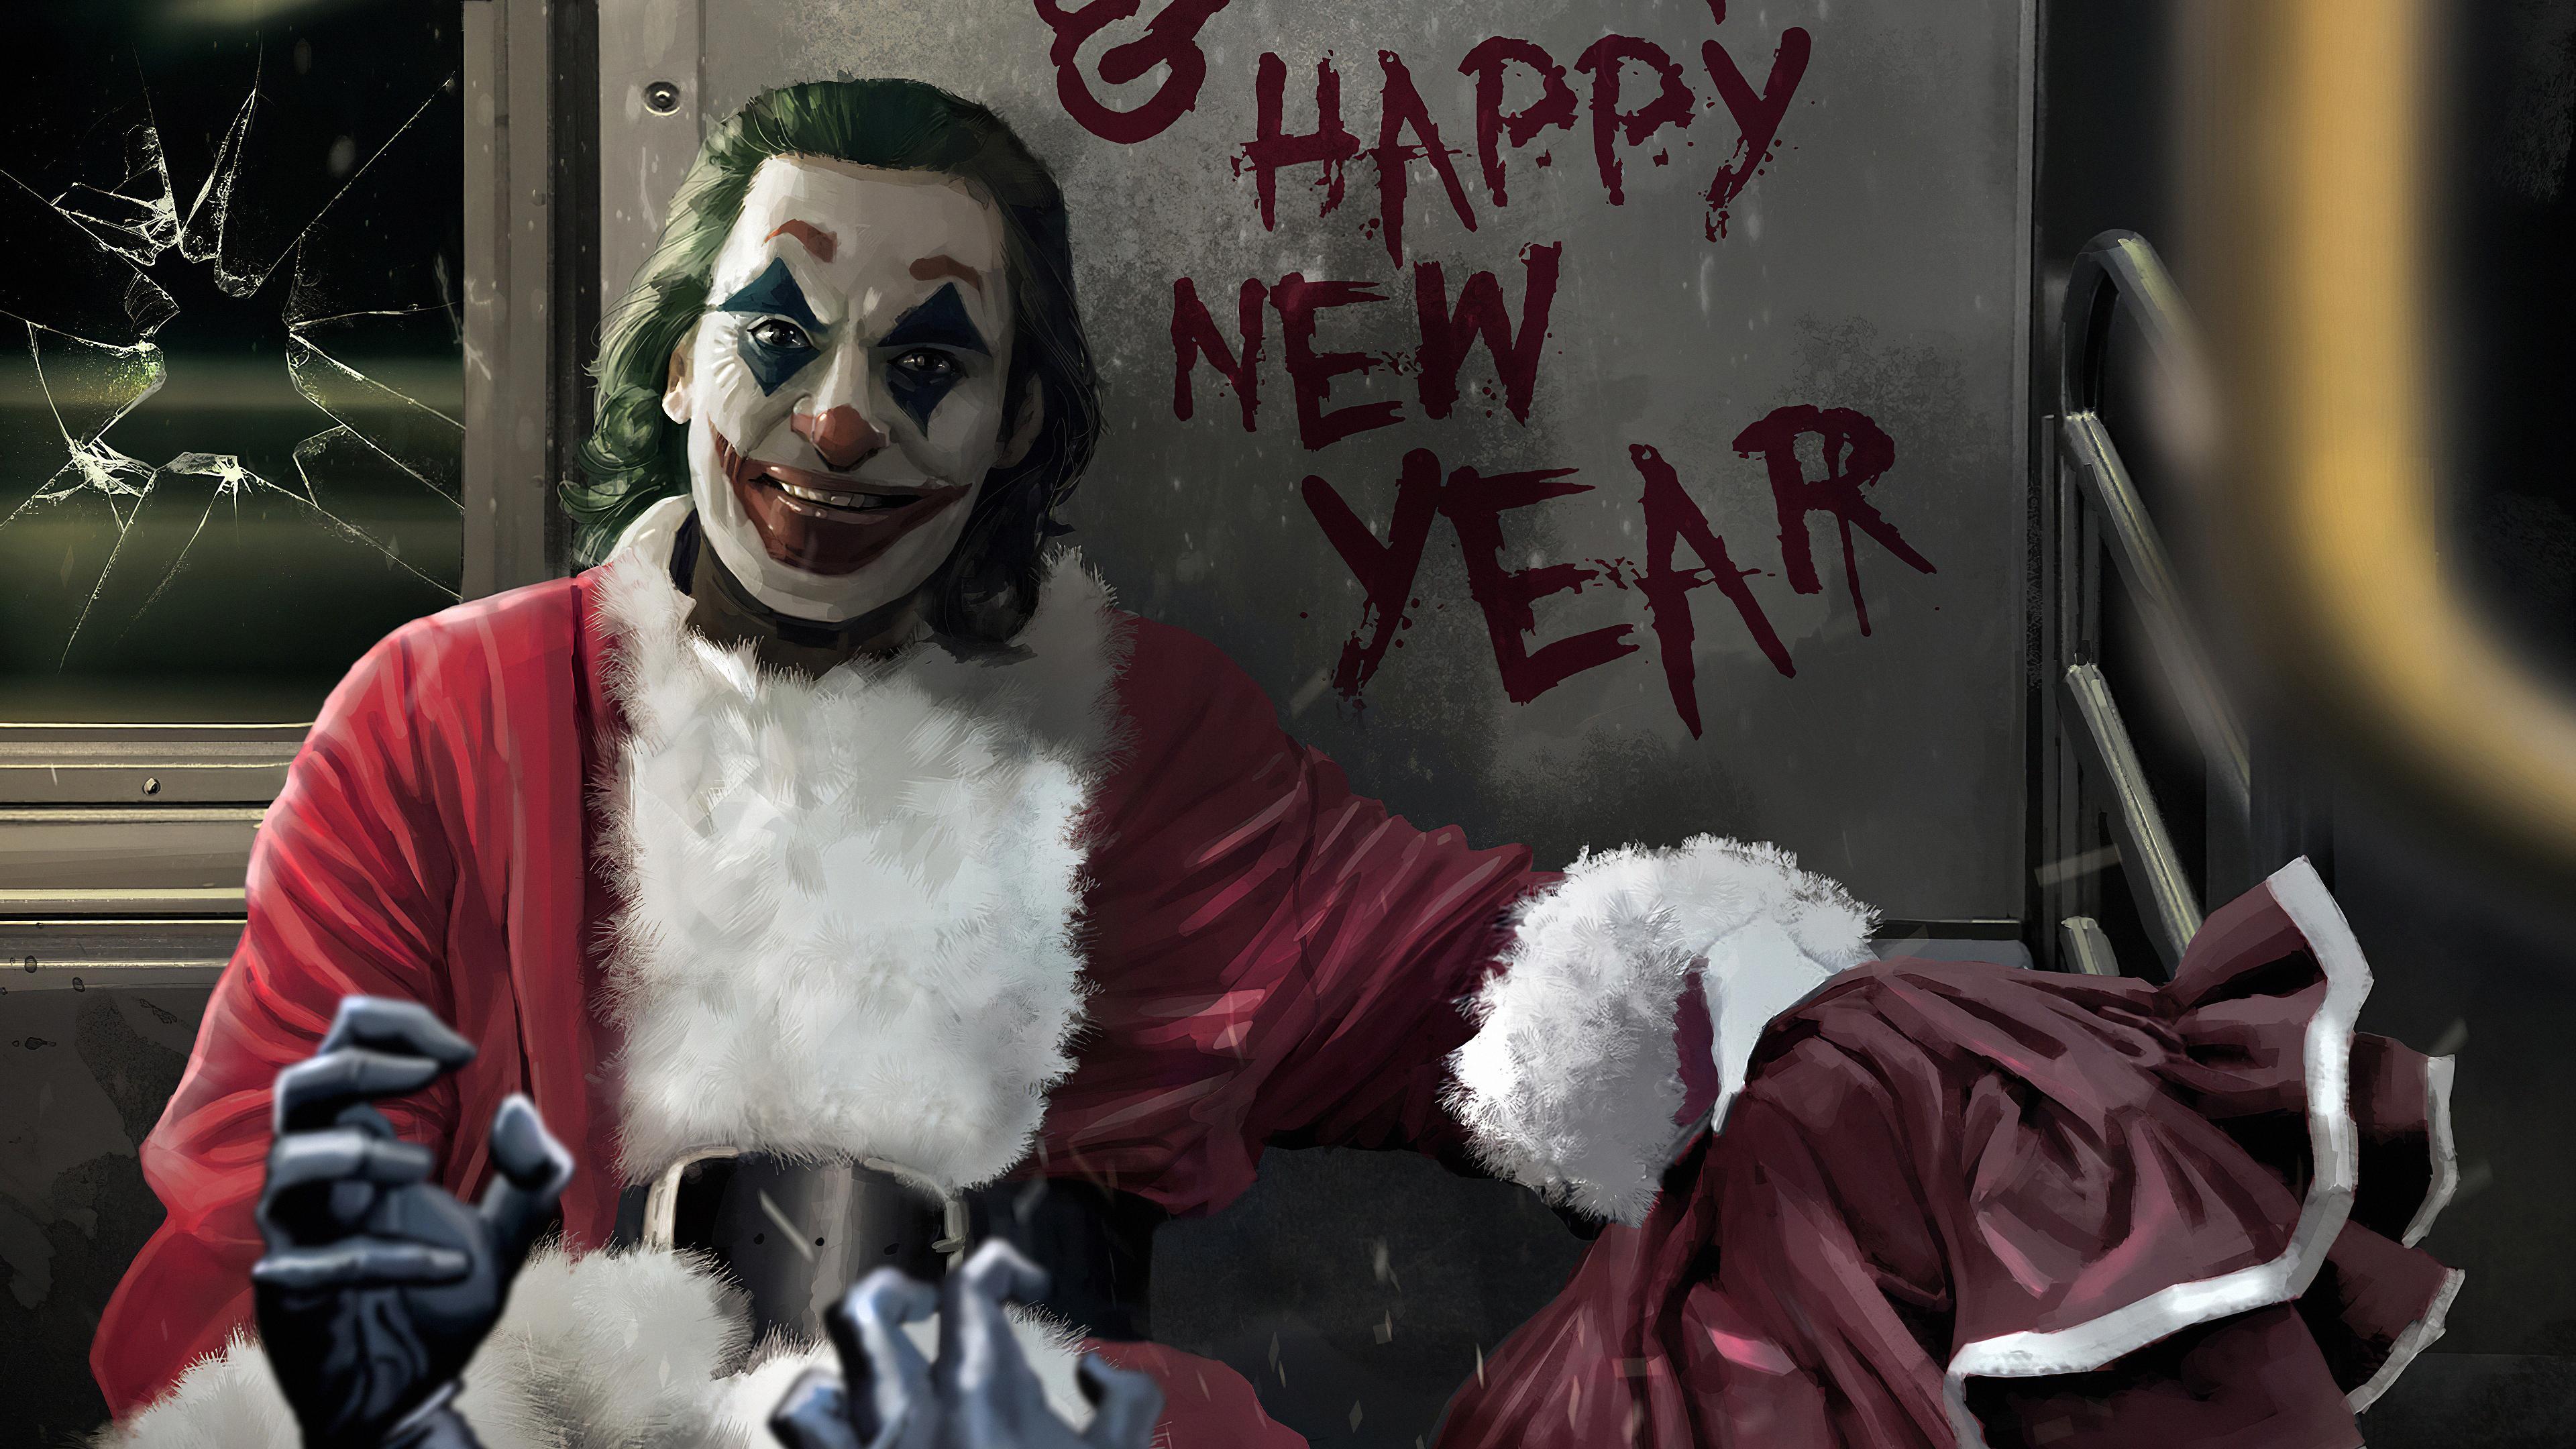 Joker Happy New Year, HD Superheroes, 4k Wallpaper, Image